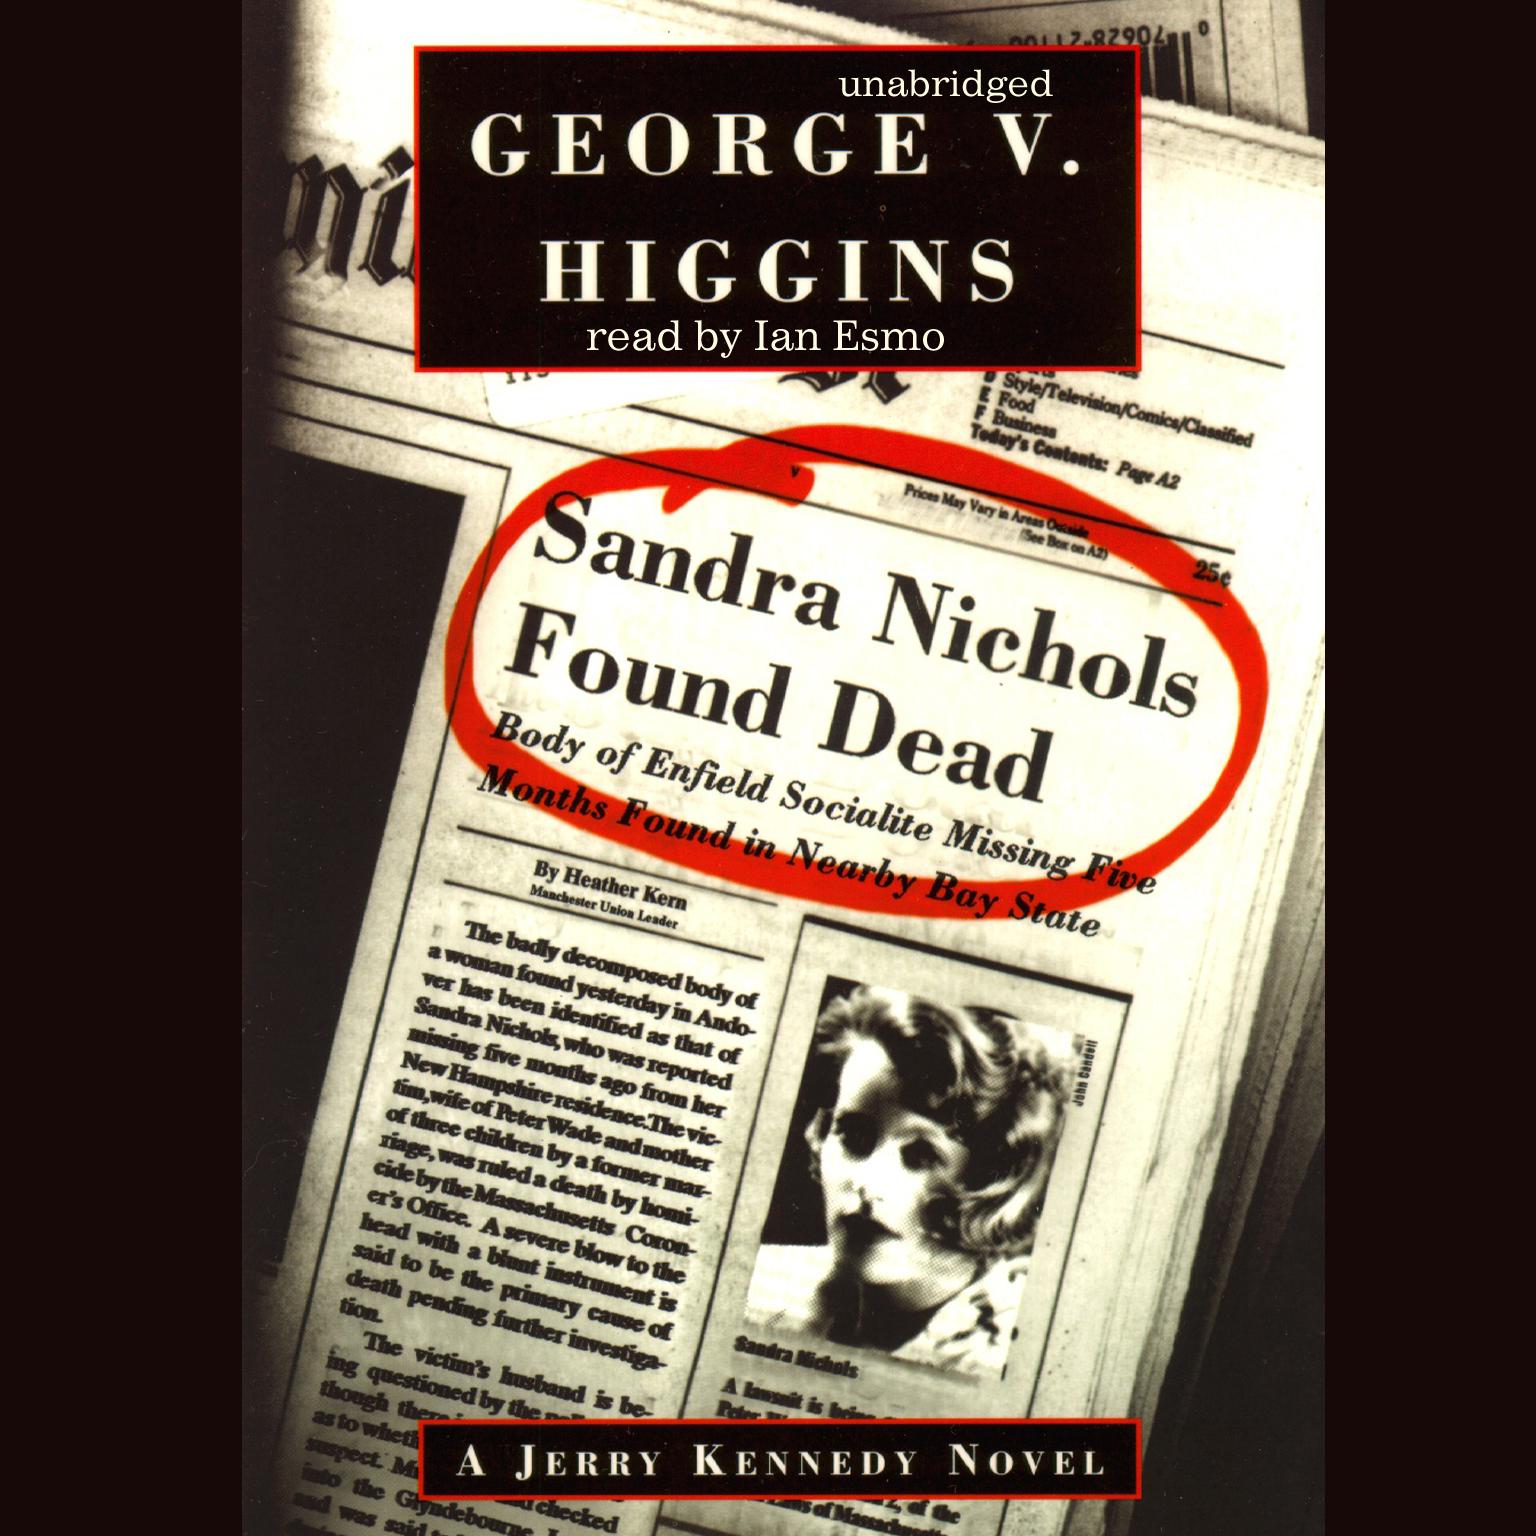 Sandra Nichols Found Dead: A Jerry Kennedy Novel Audiobook, by George V. Higgins